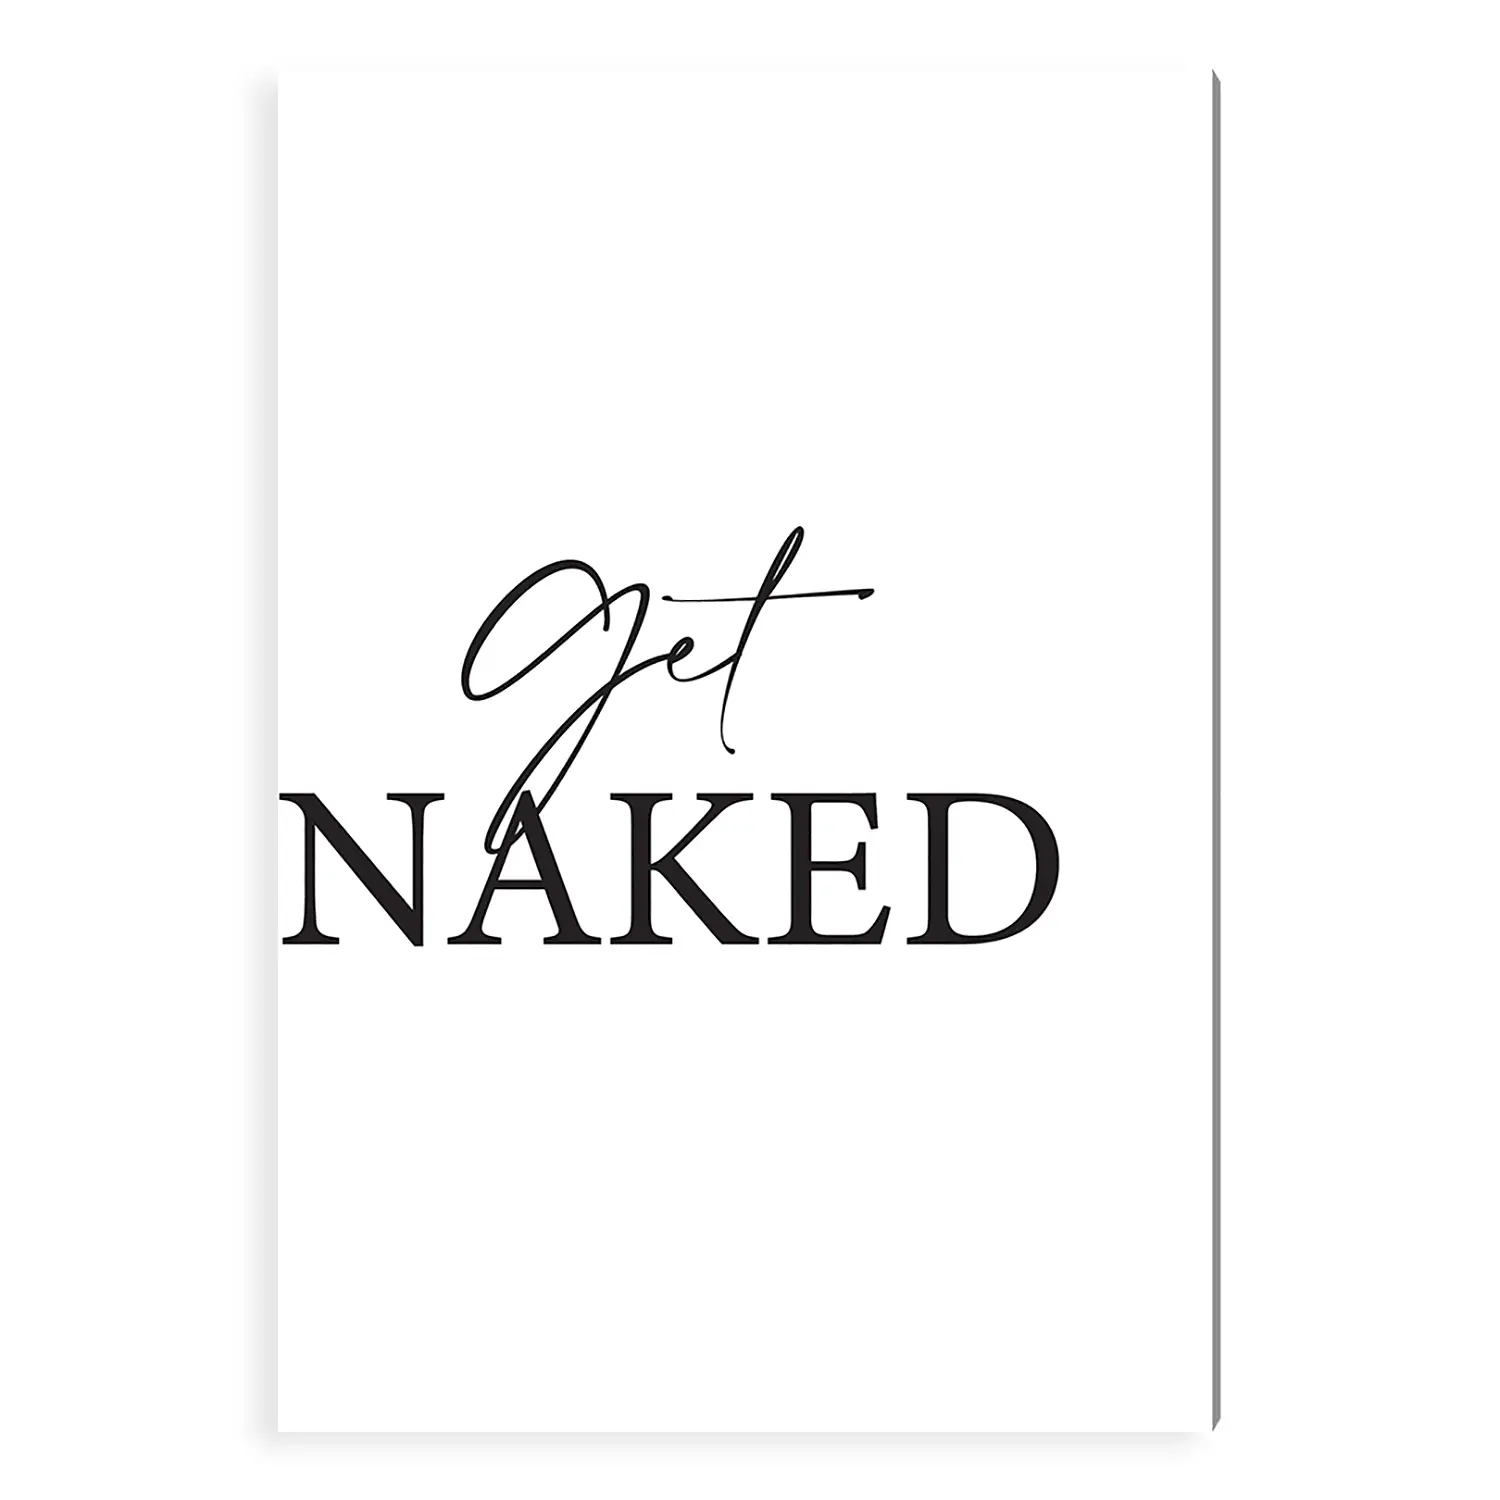 Get Bild naked II